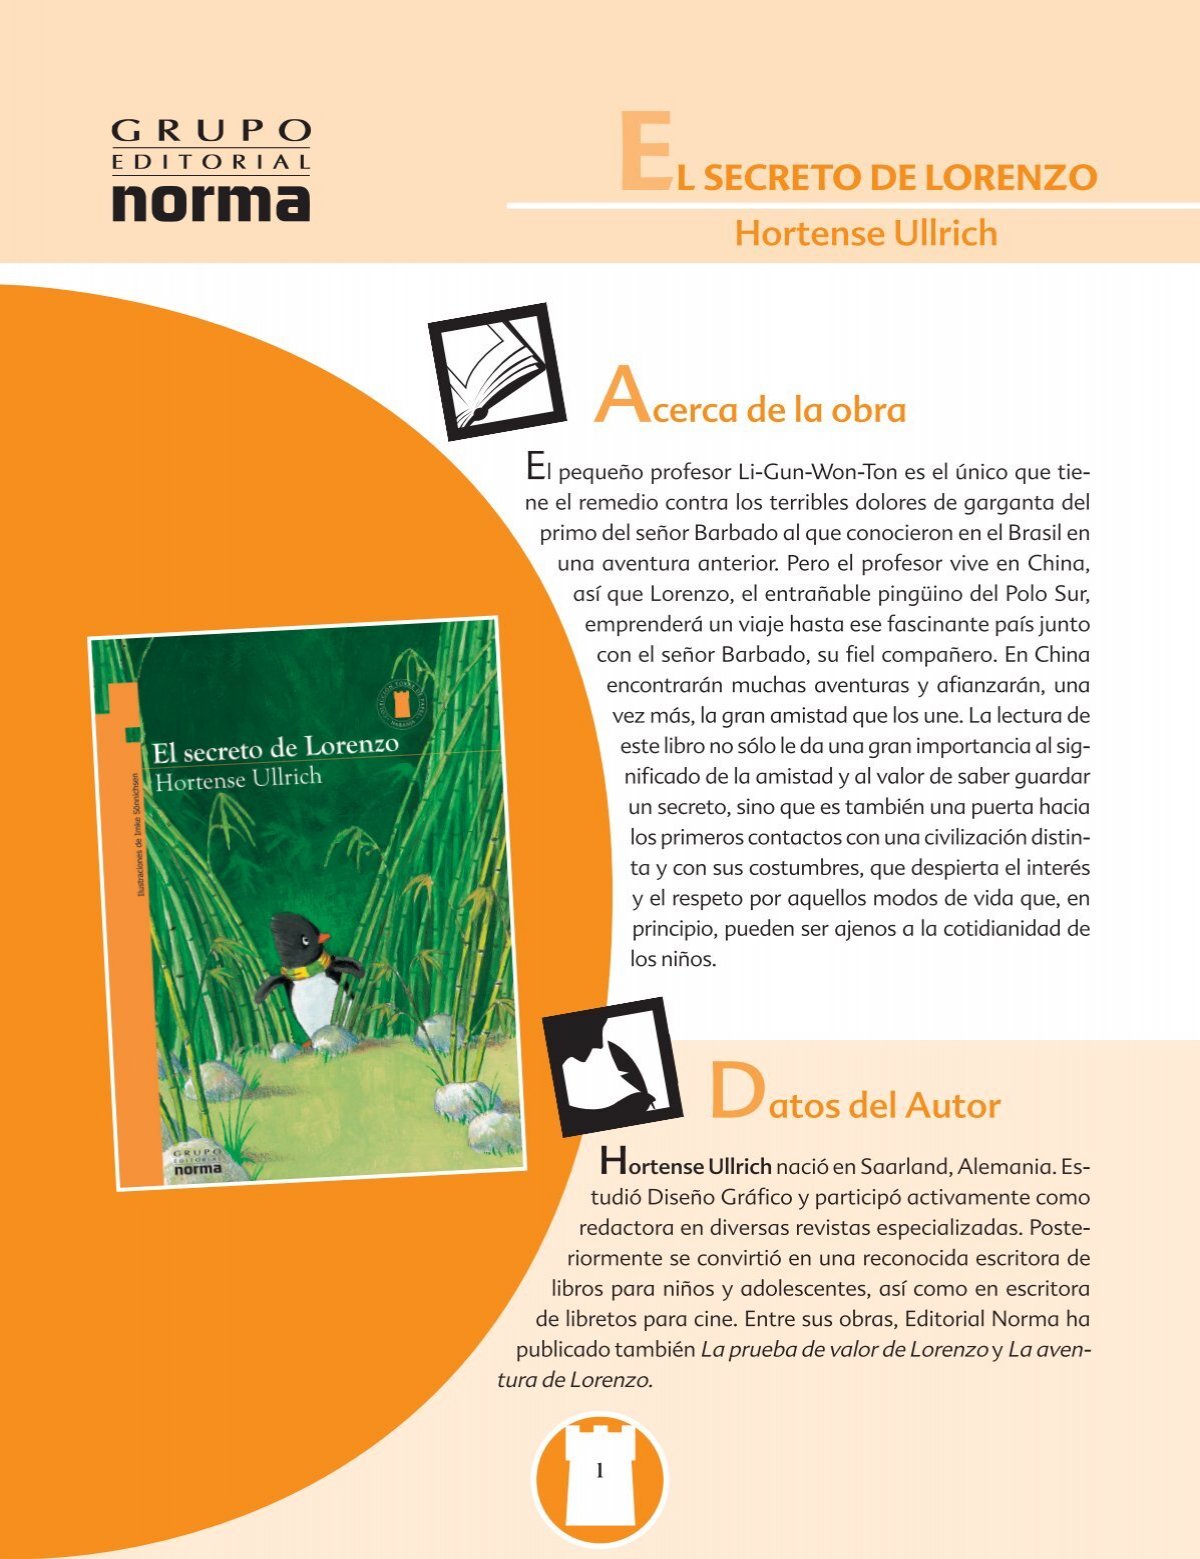 El secreto de lorenzo hortense ullrich pdf